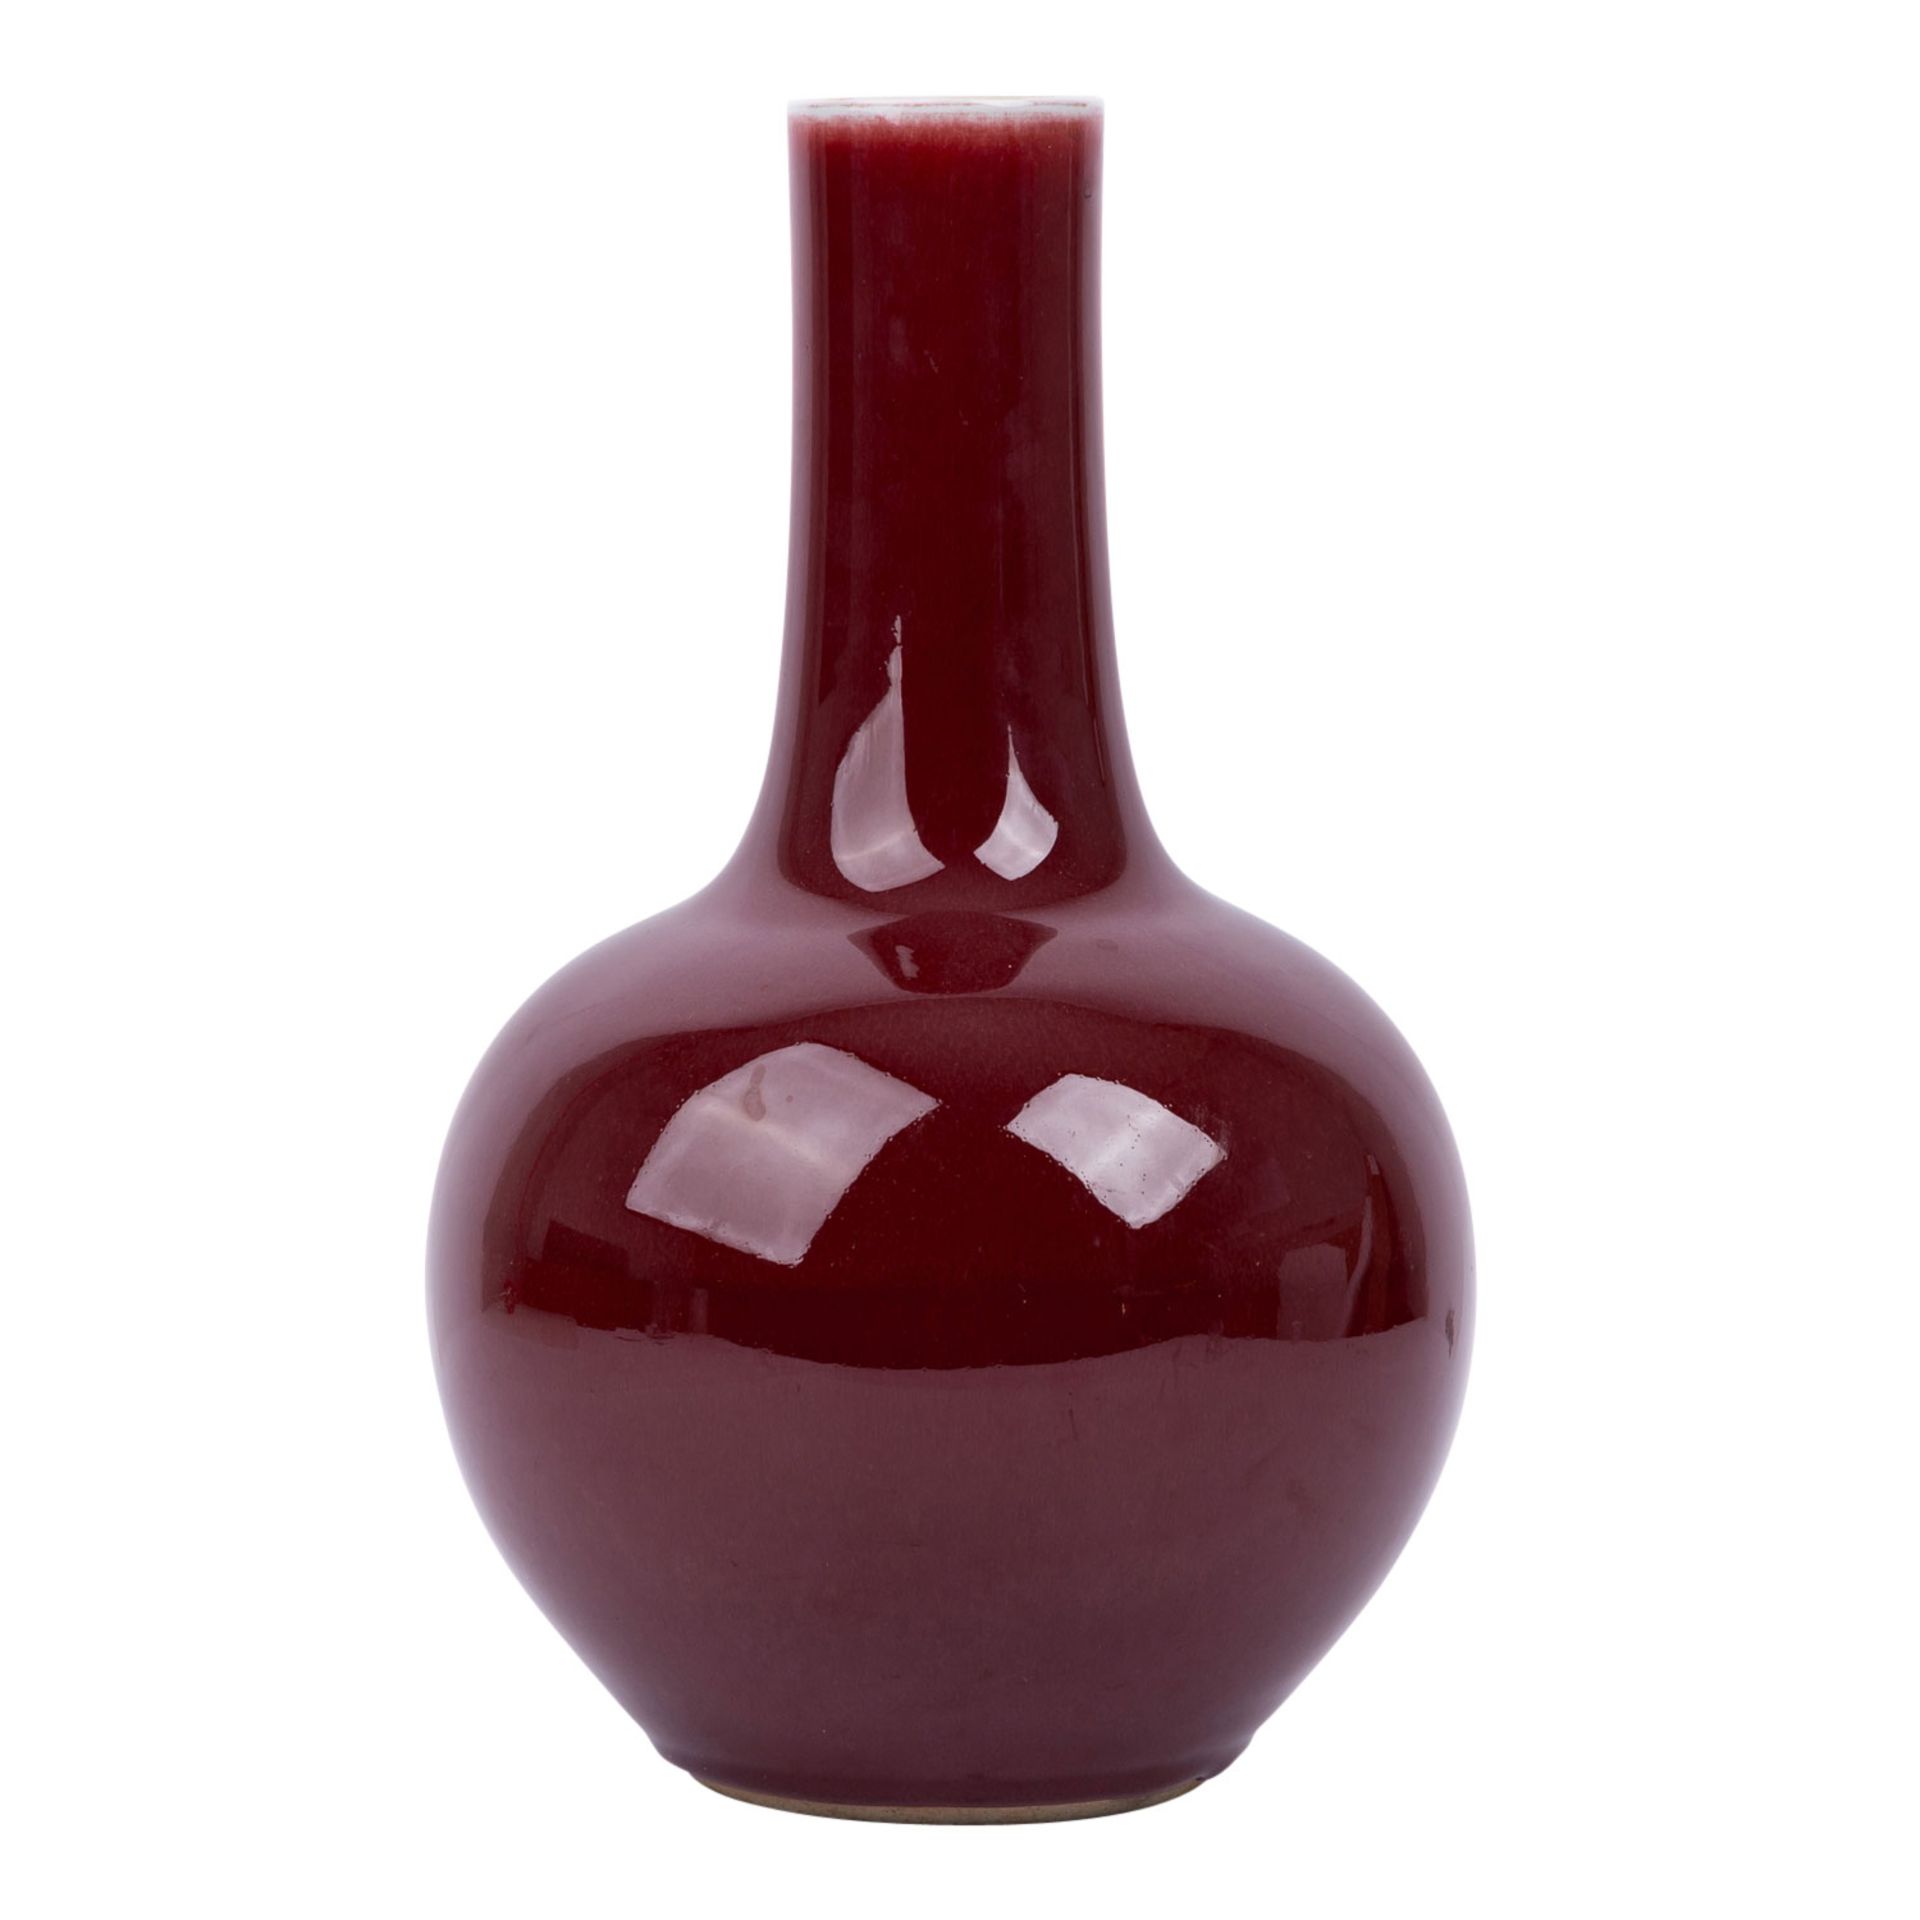 Vase aus Porzellan mit Ochsenblut-Glasur. CHINA, wohl 19. Jh. - Image 2 of 4